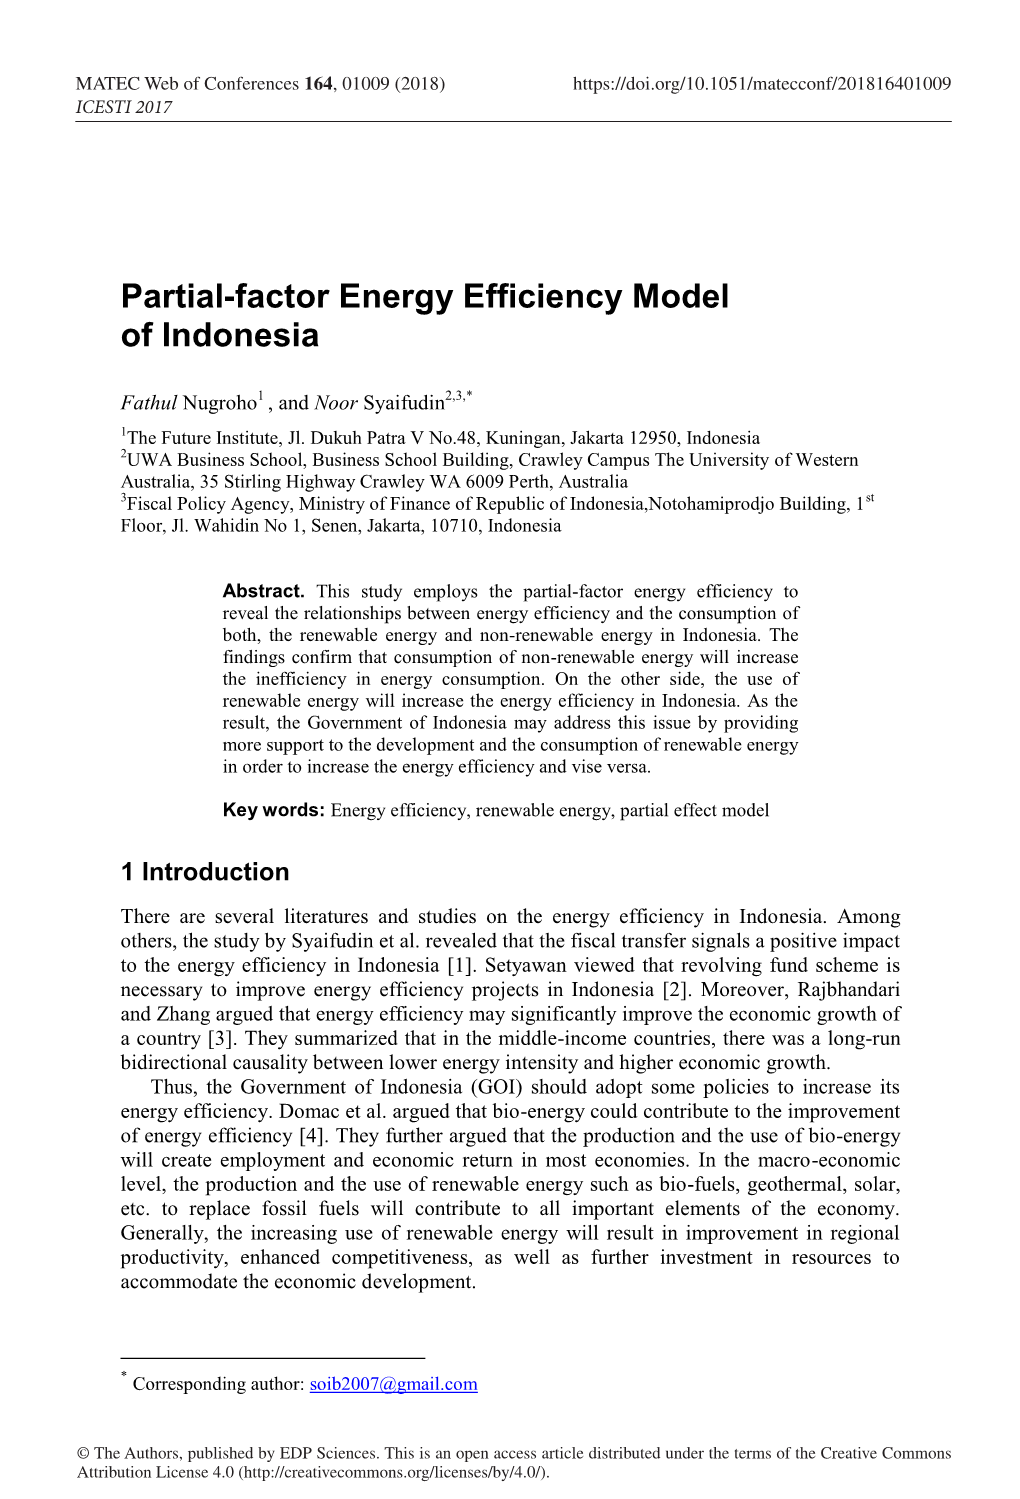 Partial-Factor Energy Efficiency Model of Indonesia